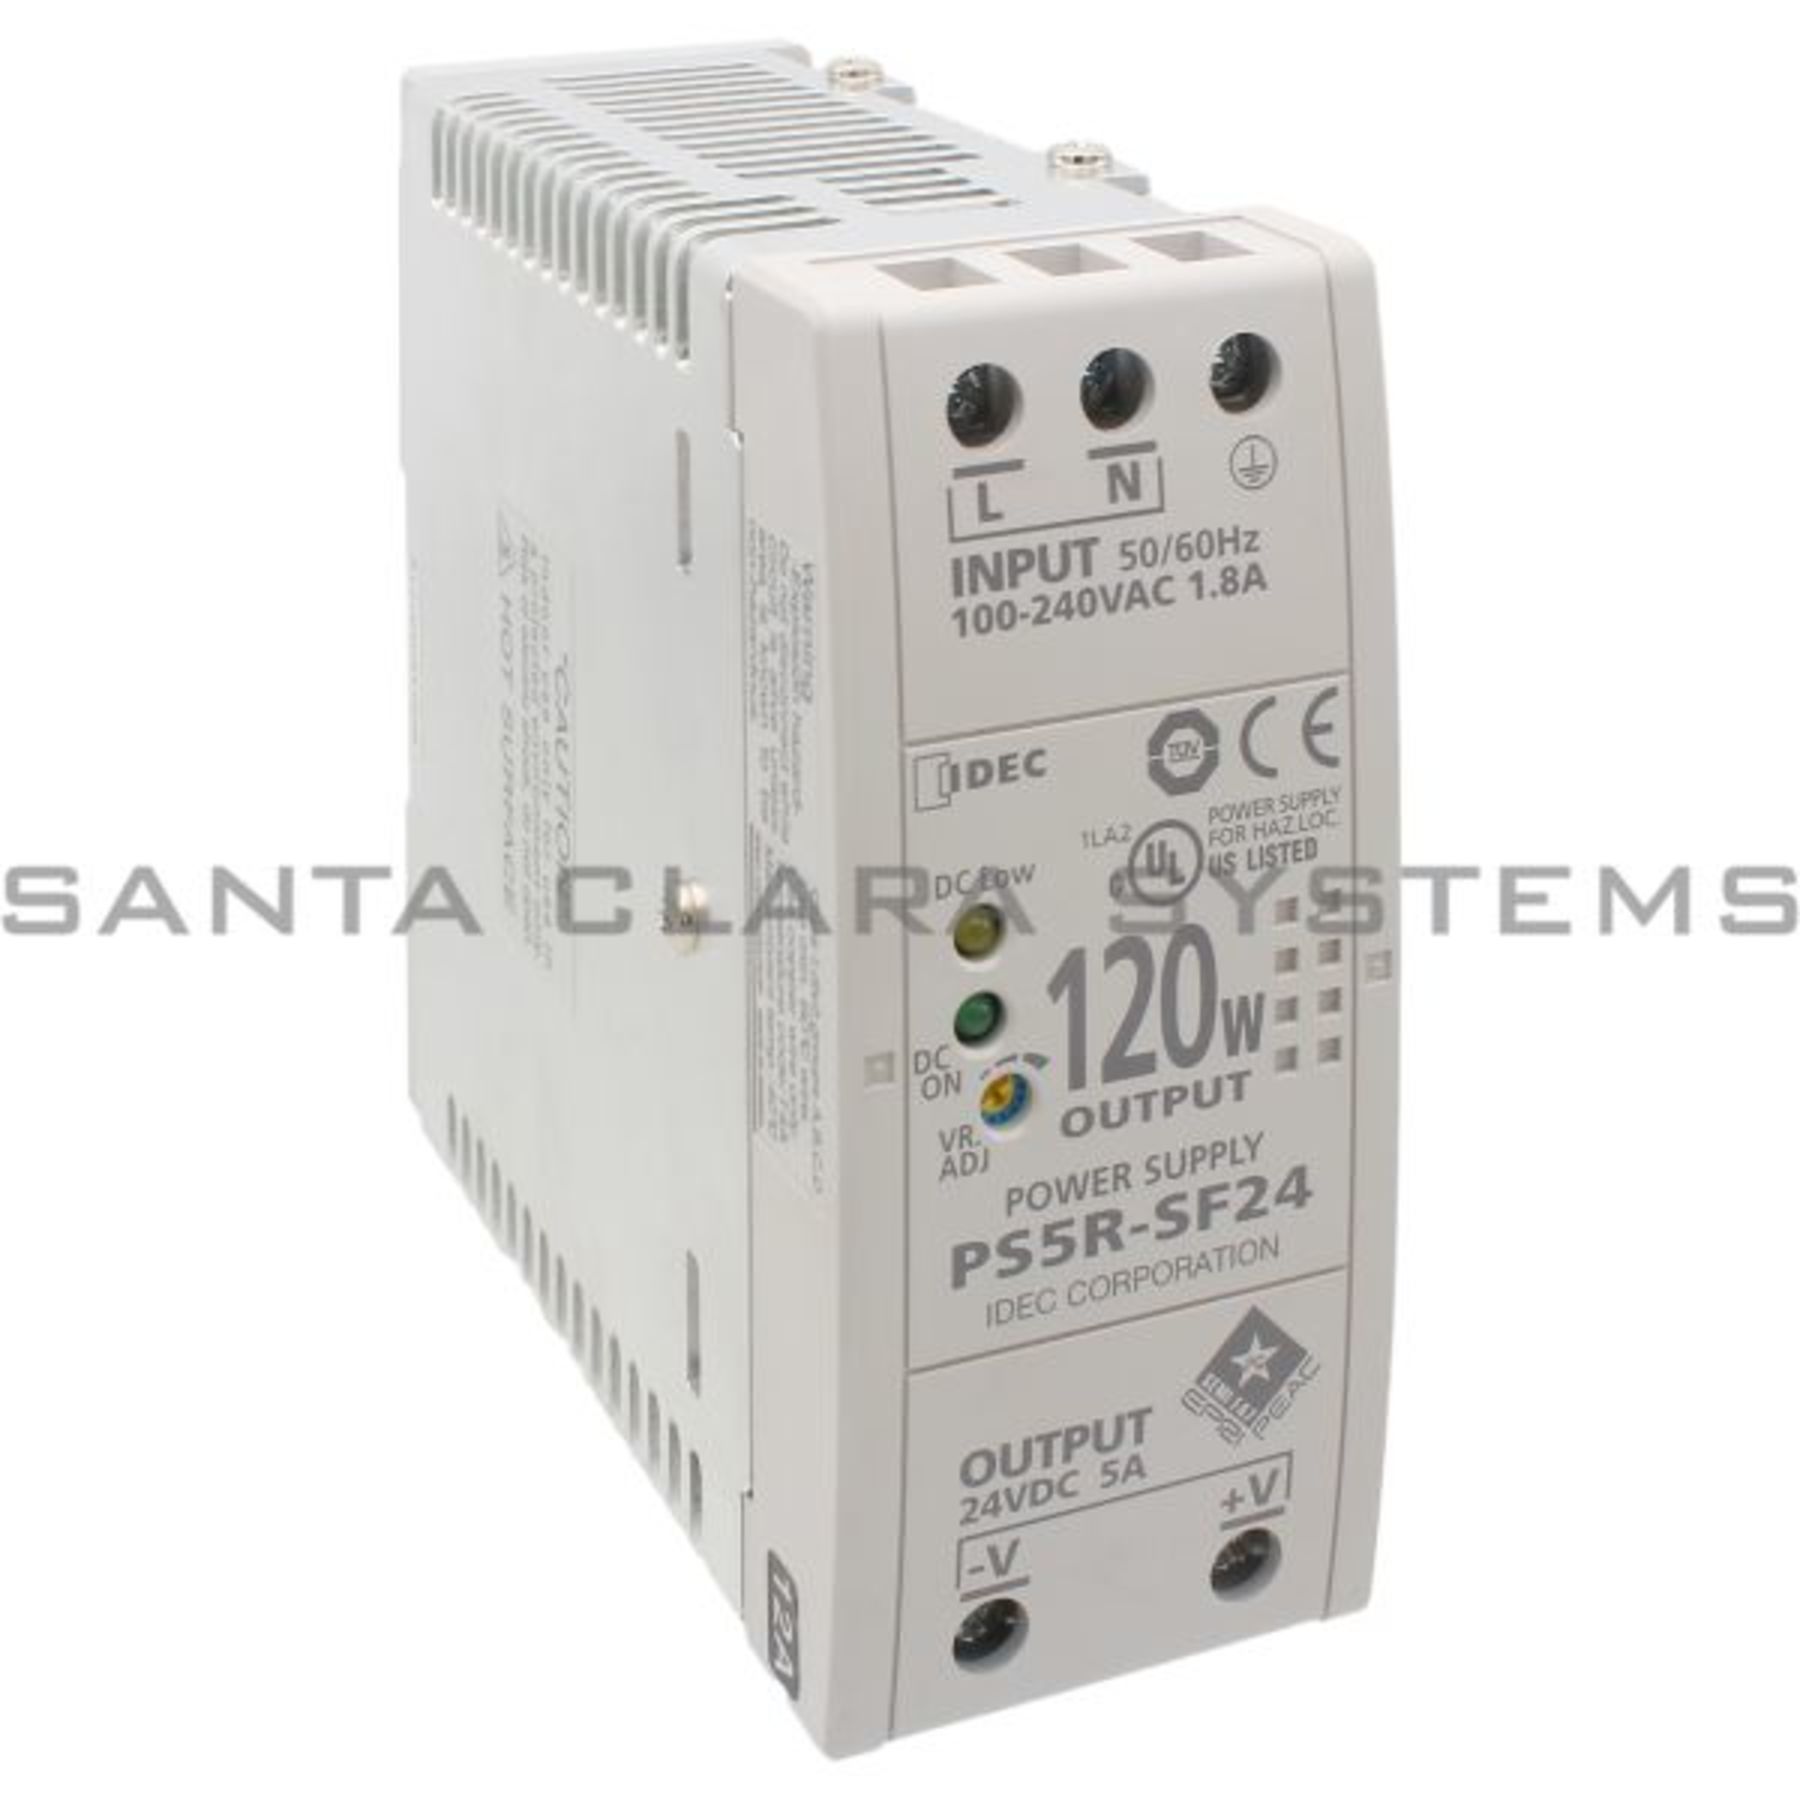 Gebraucht/Used IDEC Power Supply PS5R-SD24  60W Output 